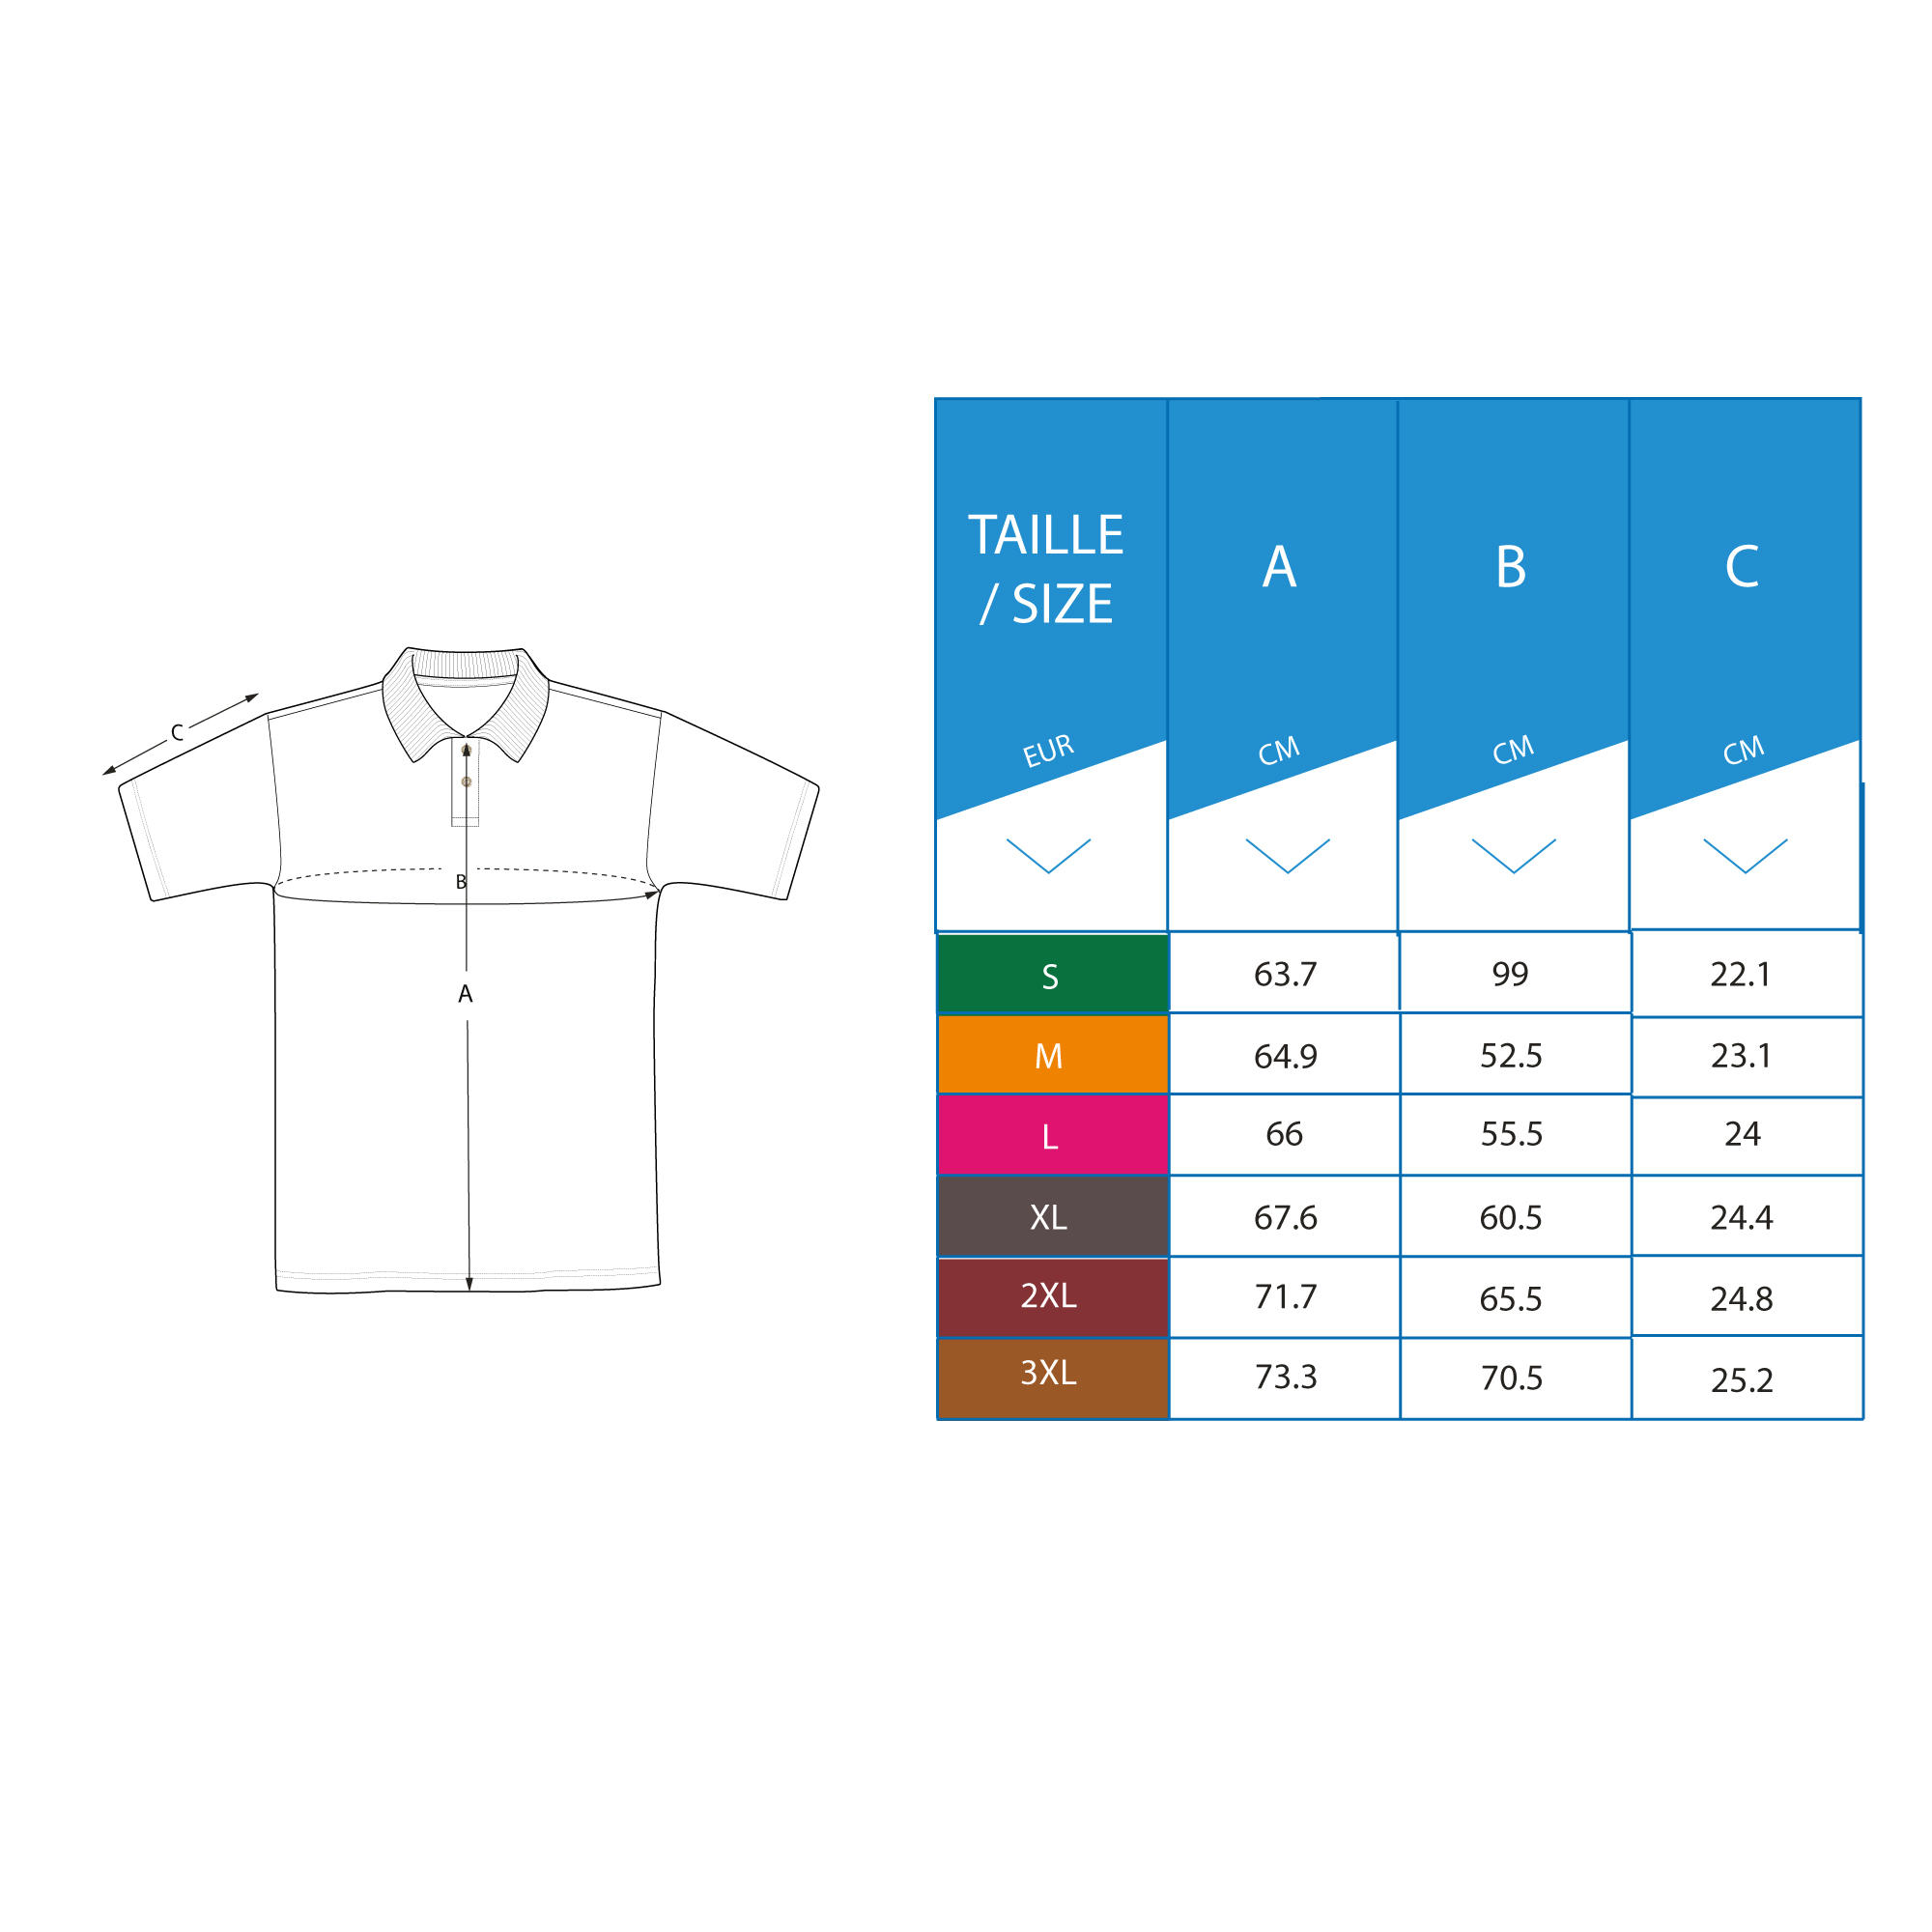 Golf Swing Shirt Size Chart